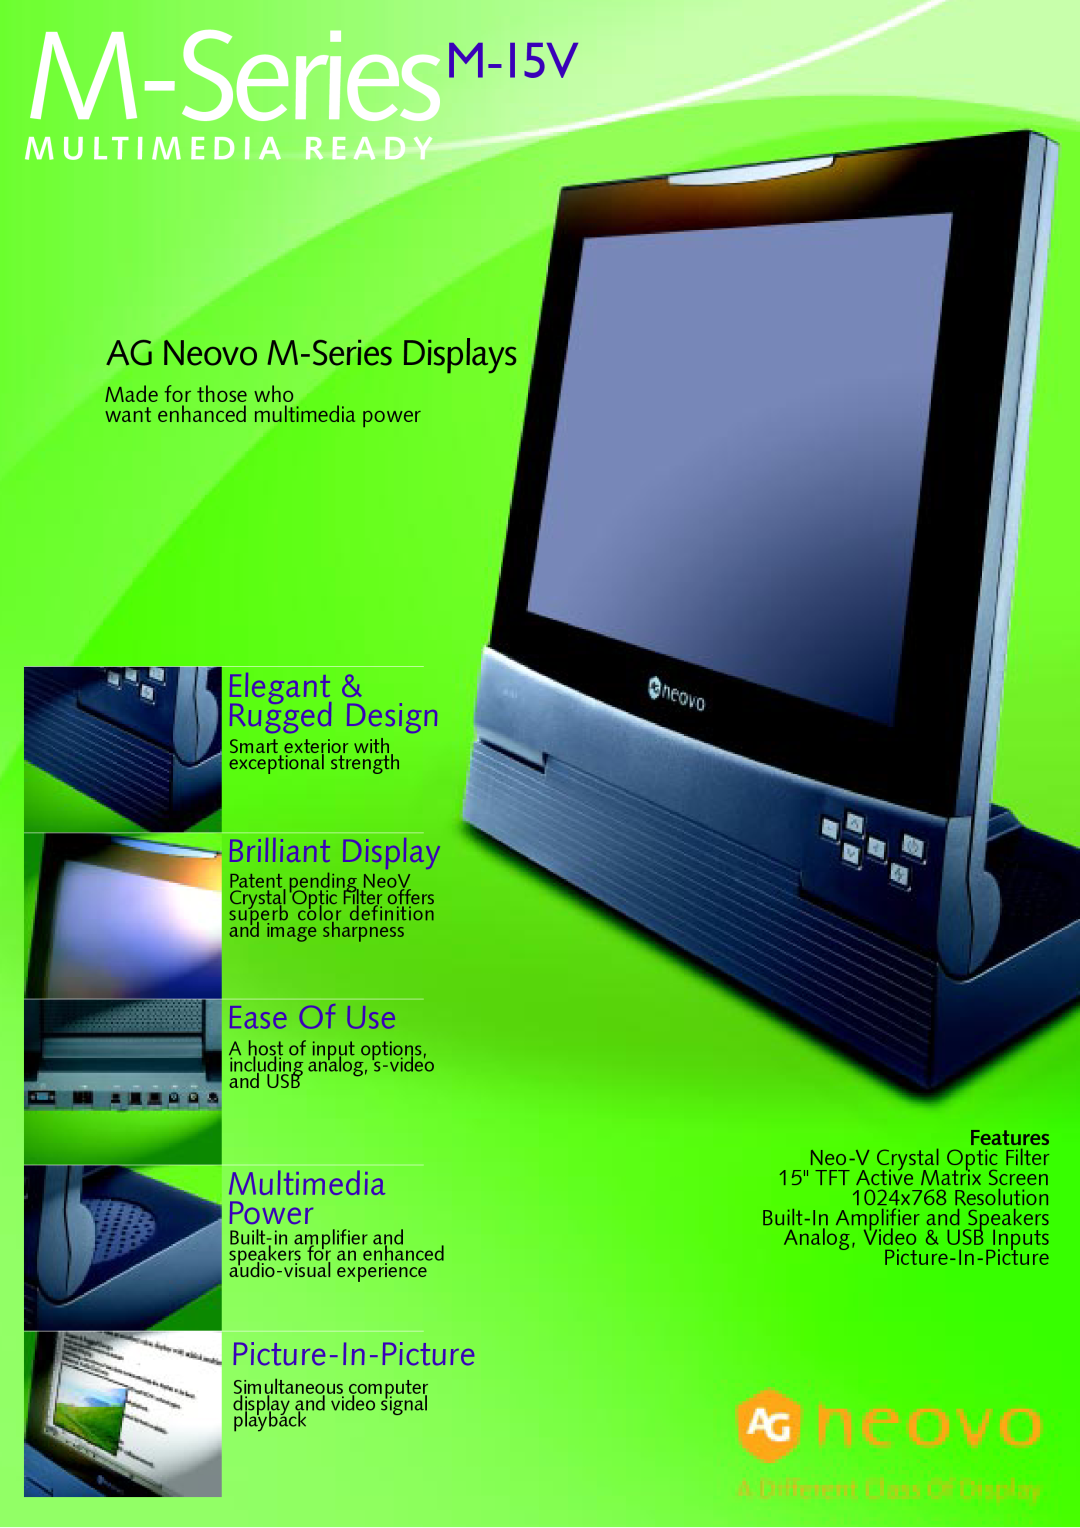 AG Neovo manual M-SeriesM-15V, AG Neovo M-Series Displays, M U Lt I M E D I A R E A D Y, Elegant Rugged Design 